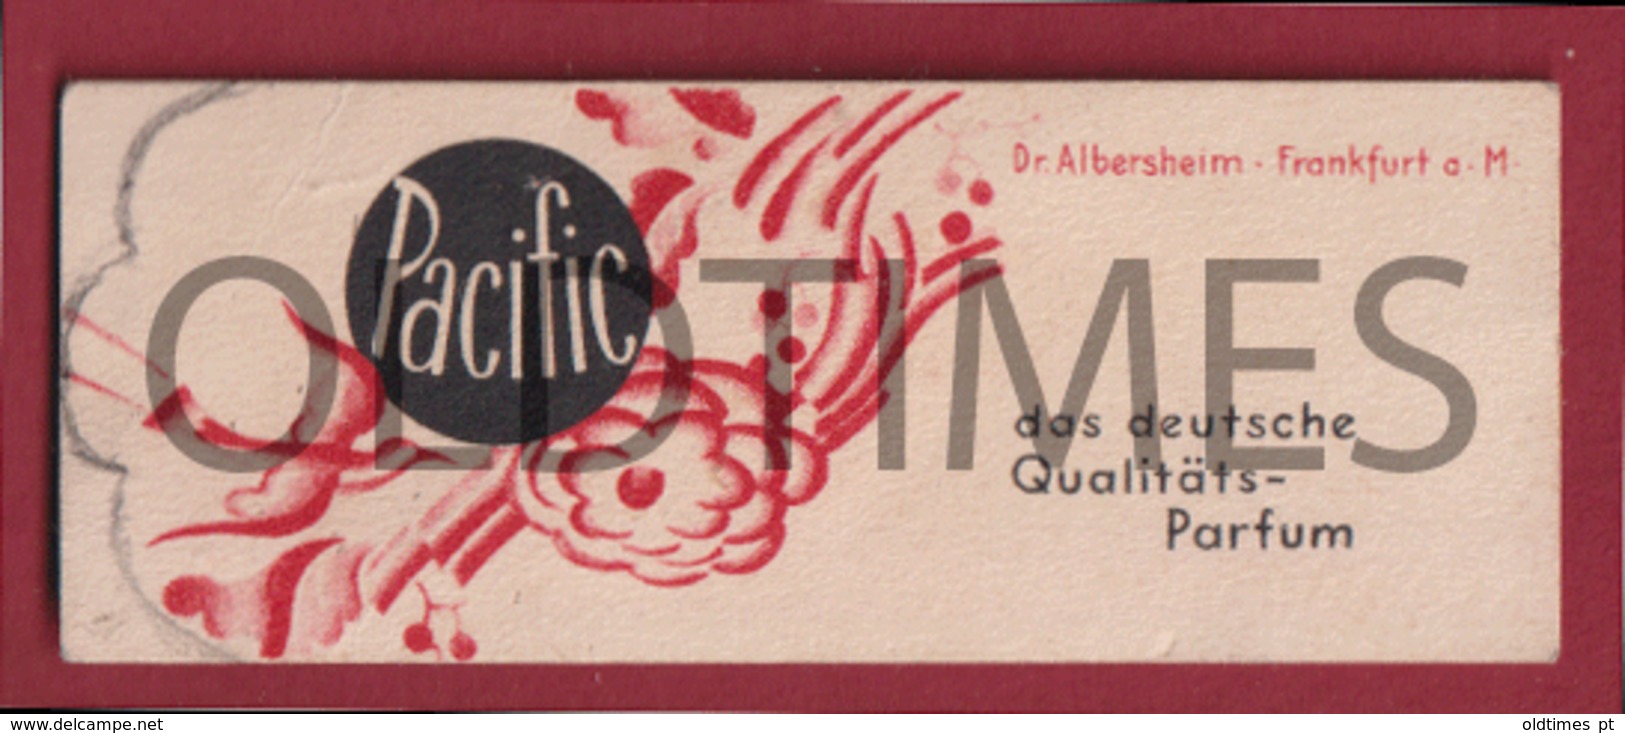 GERMANY - " PACIFIC " - PERFUME LABEL - DR. ALBERSHEIM - FRANKFURT - 1940 - Etichette